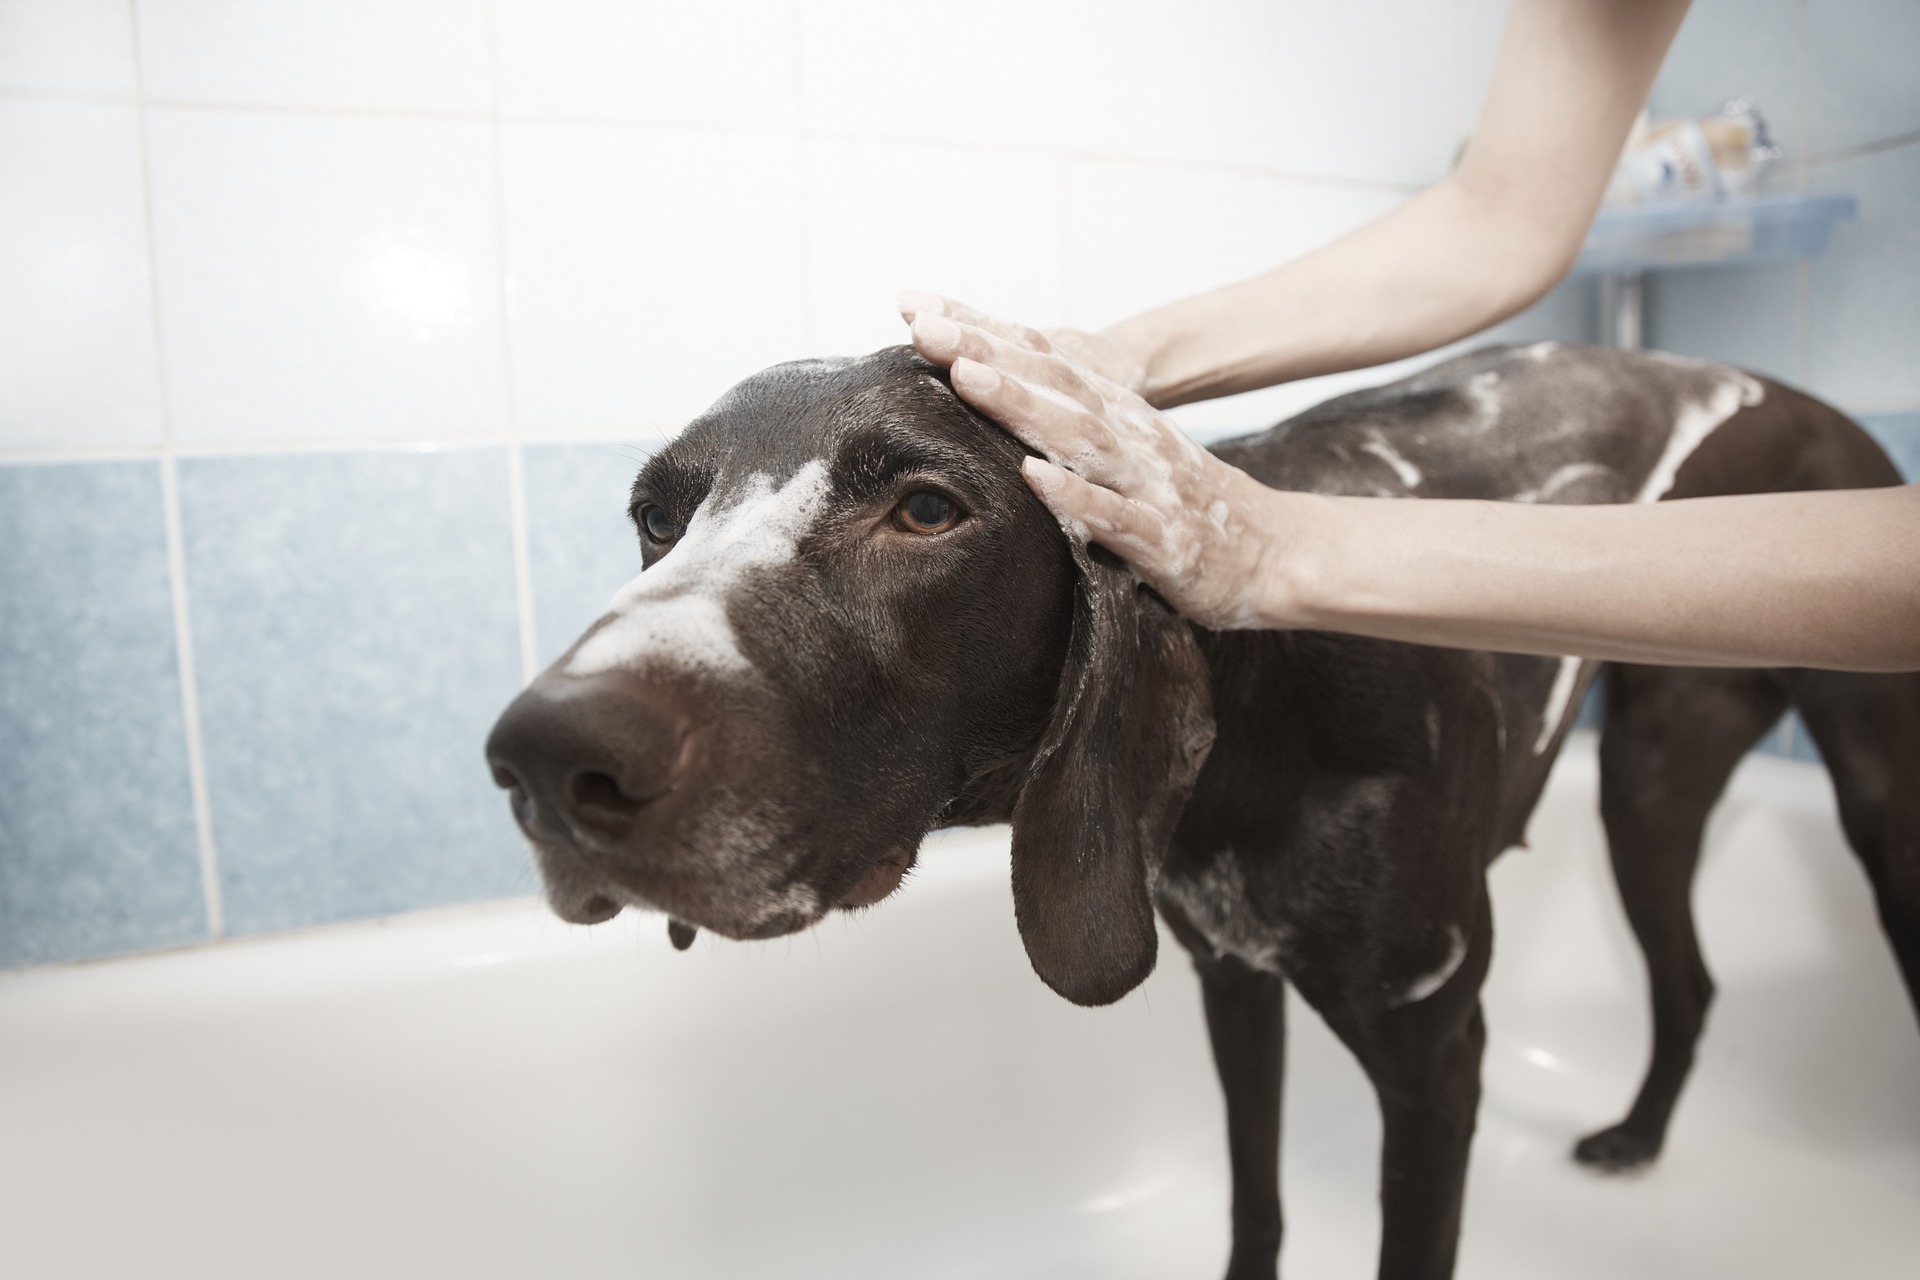 Dog being bathed and shampooed